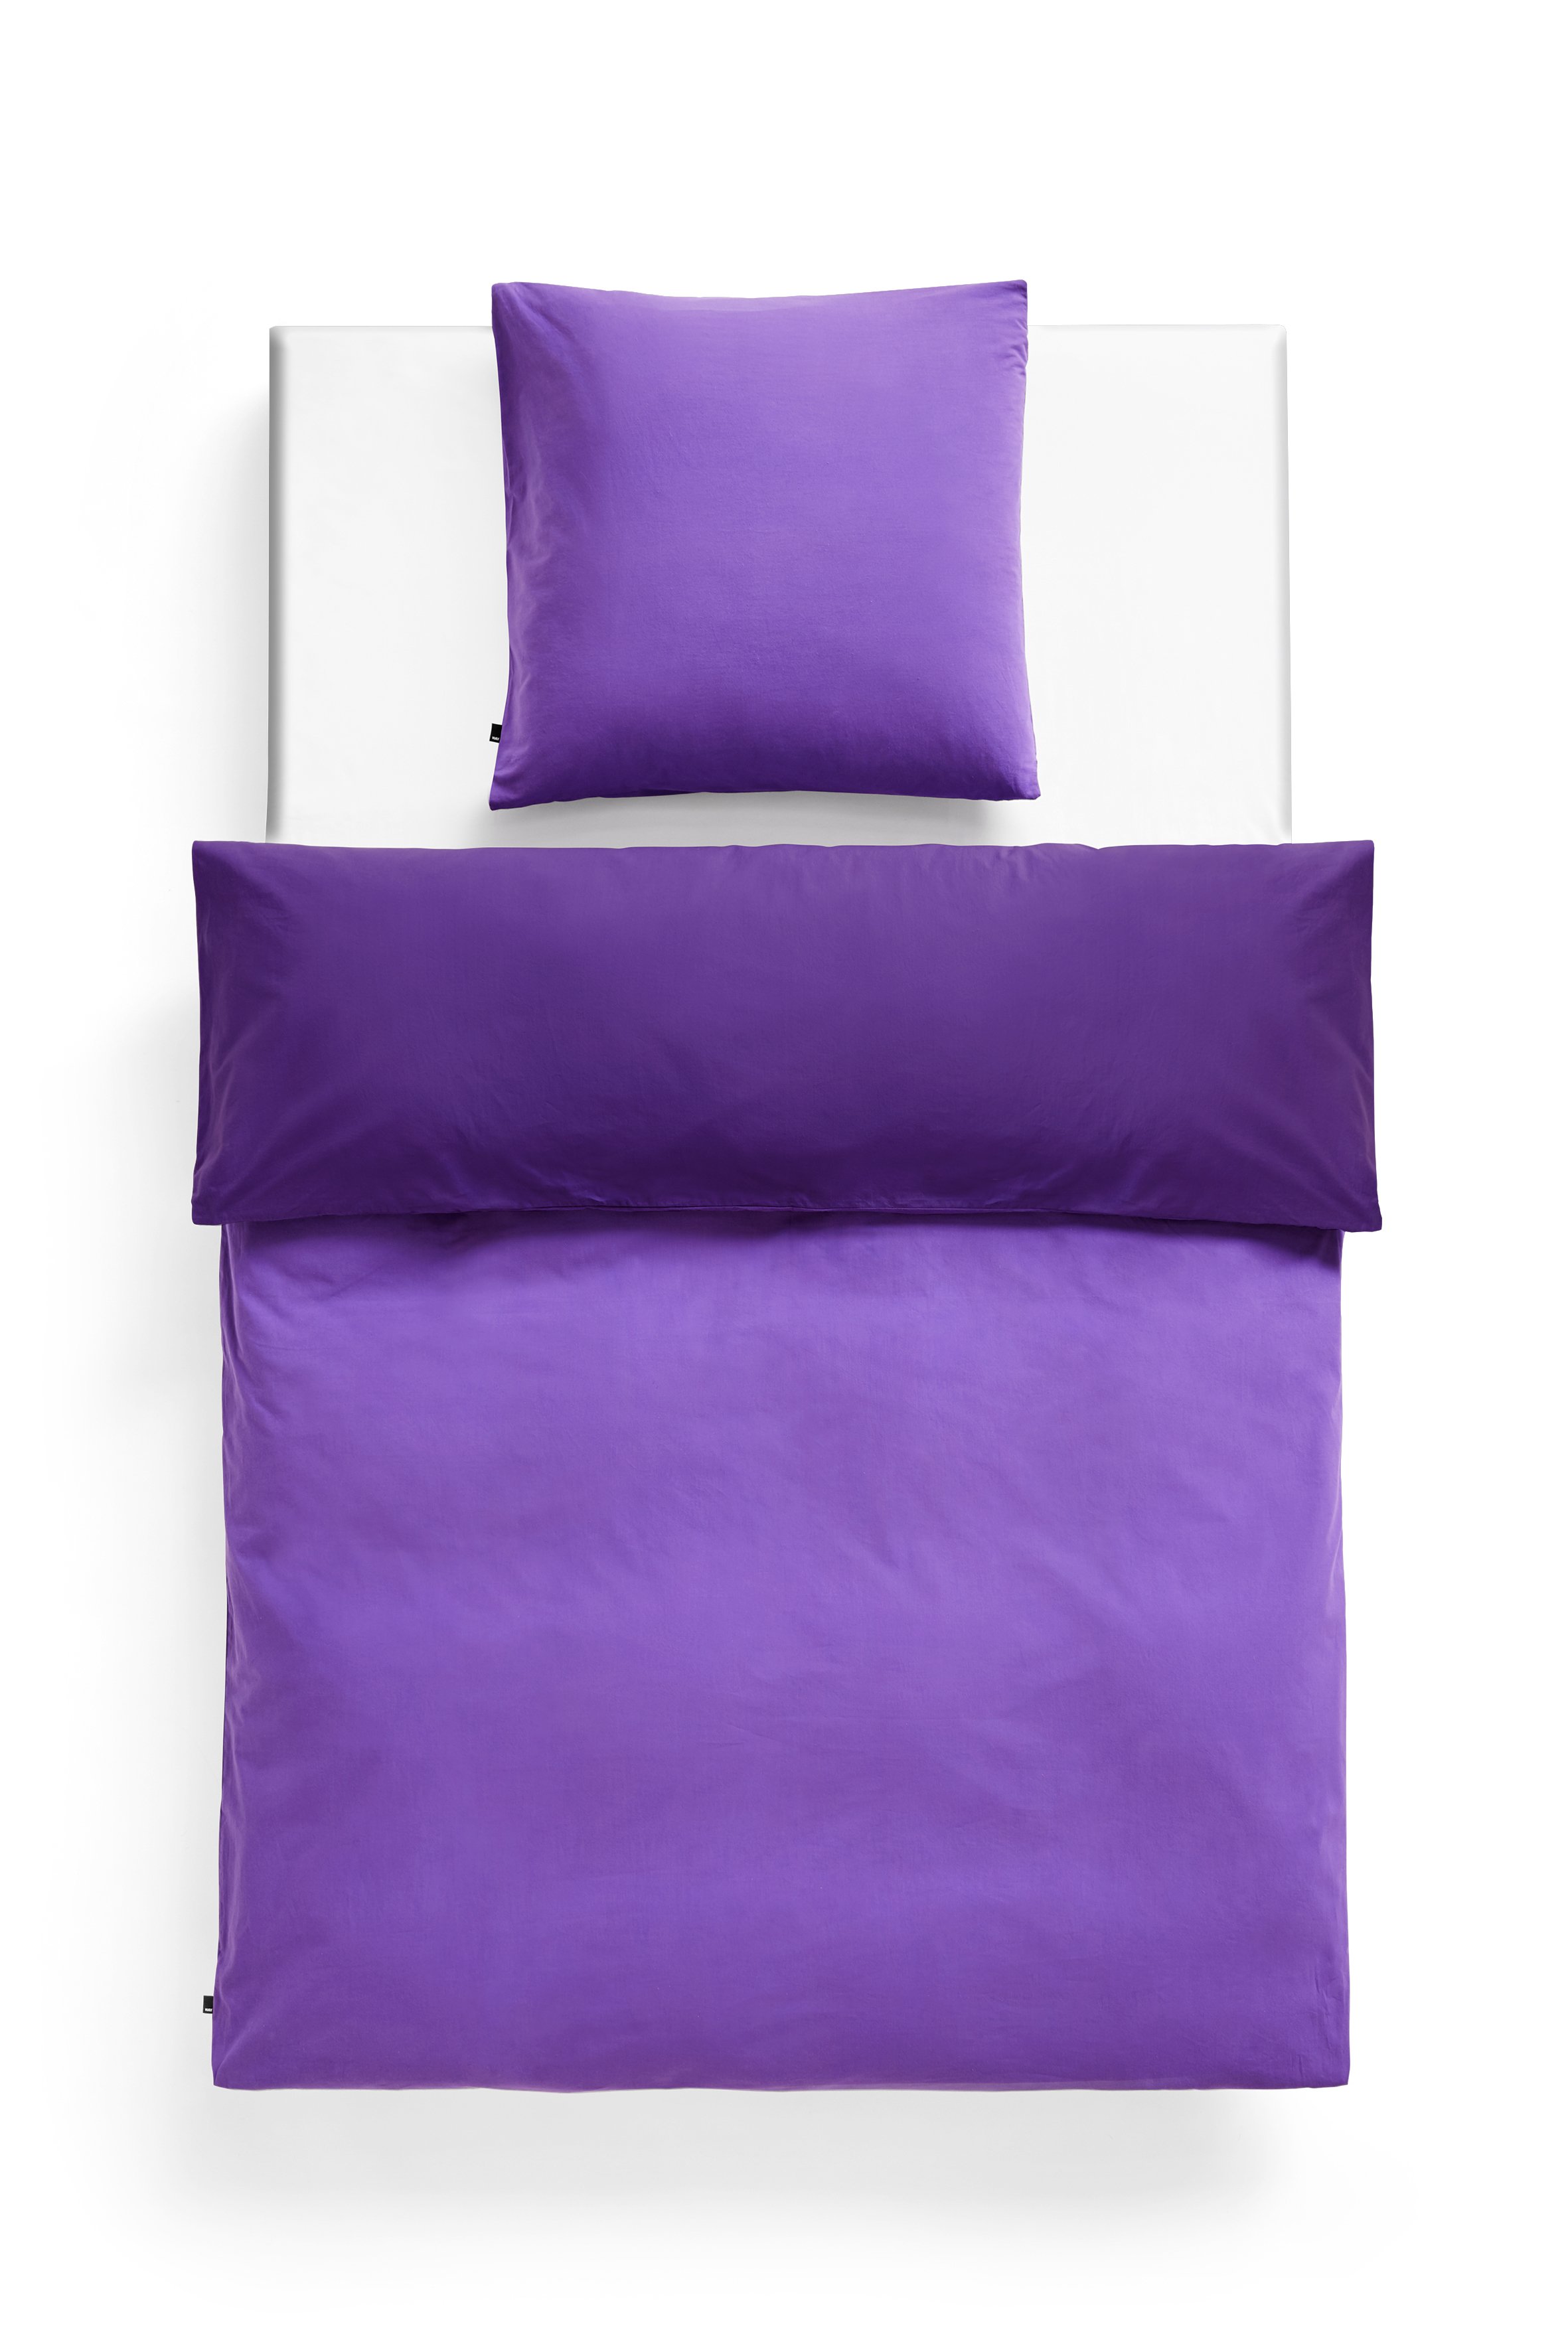 Duo Duvet Cover_Duo Pillow Case_vivid purple.jpg